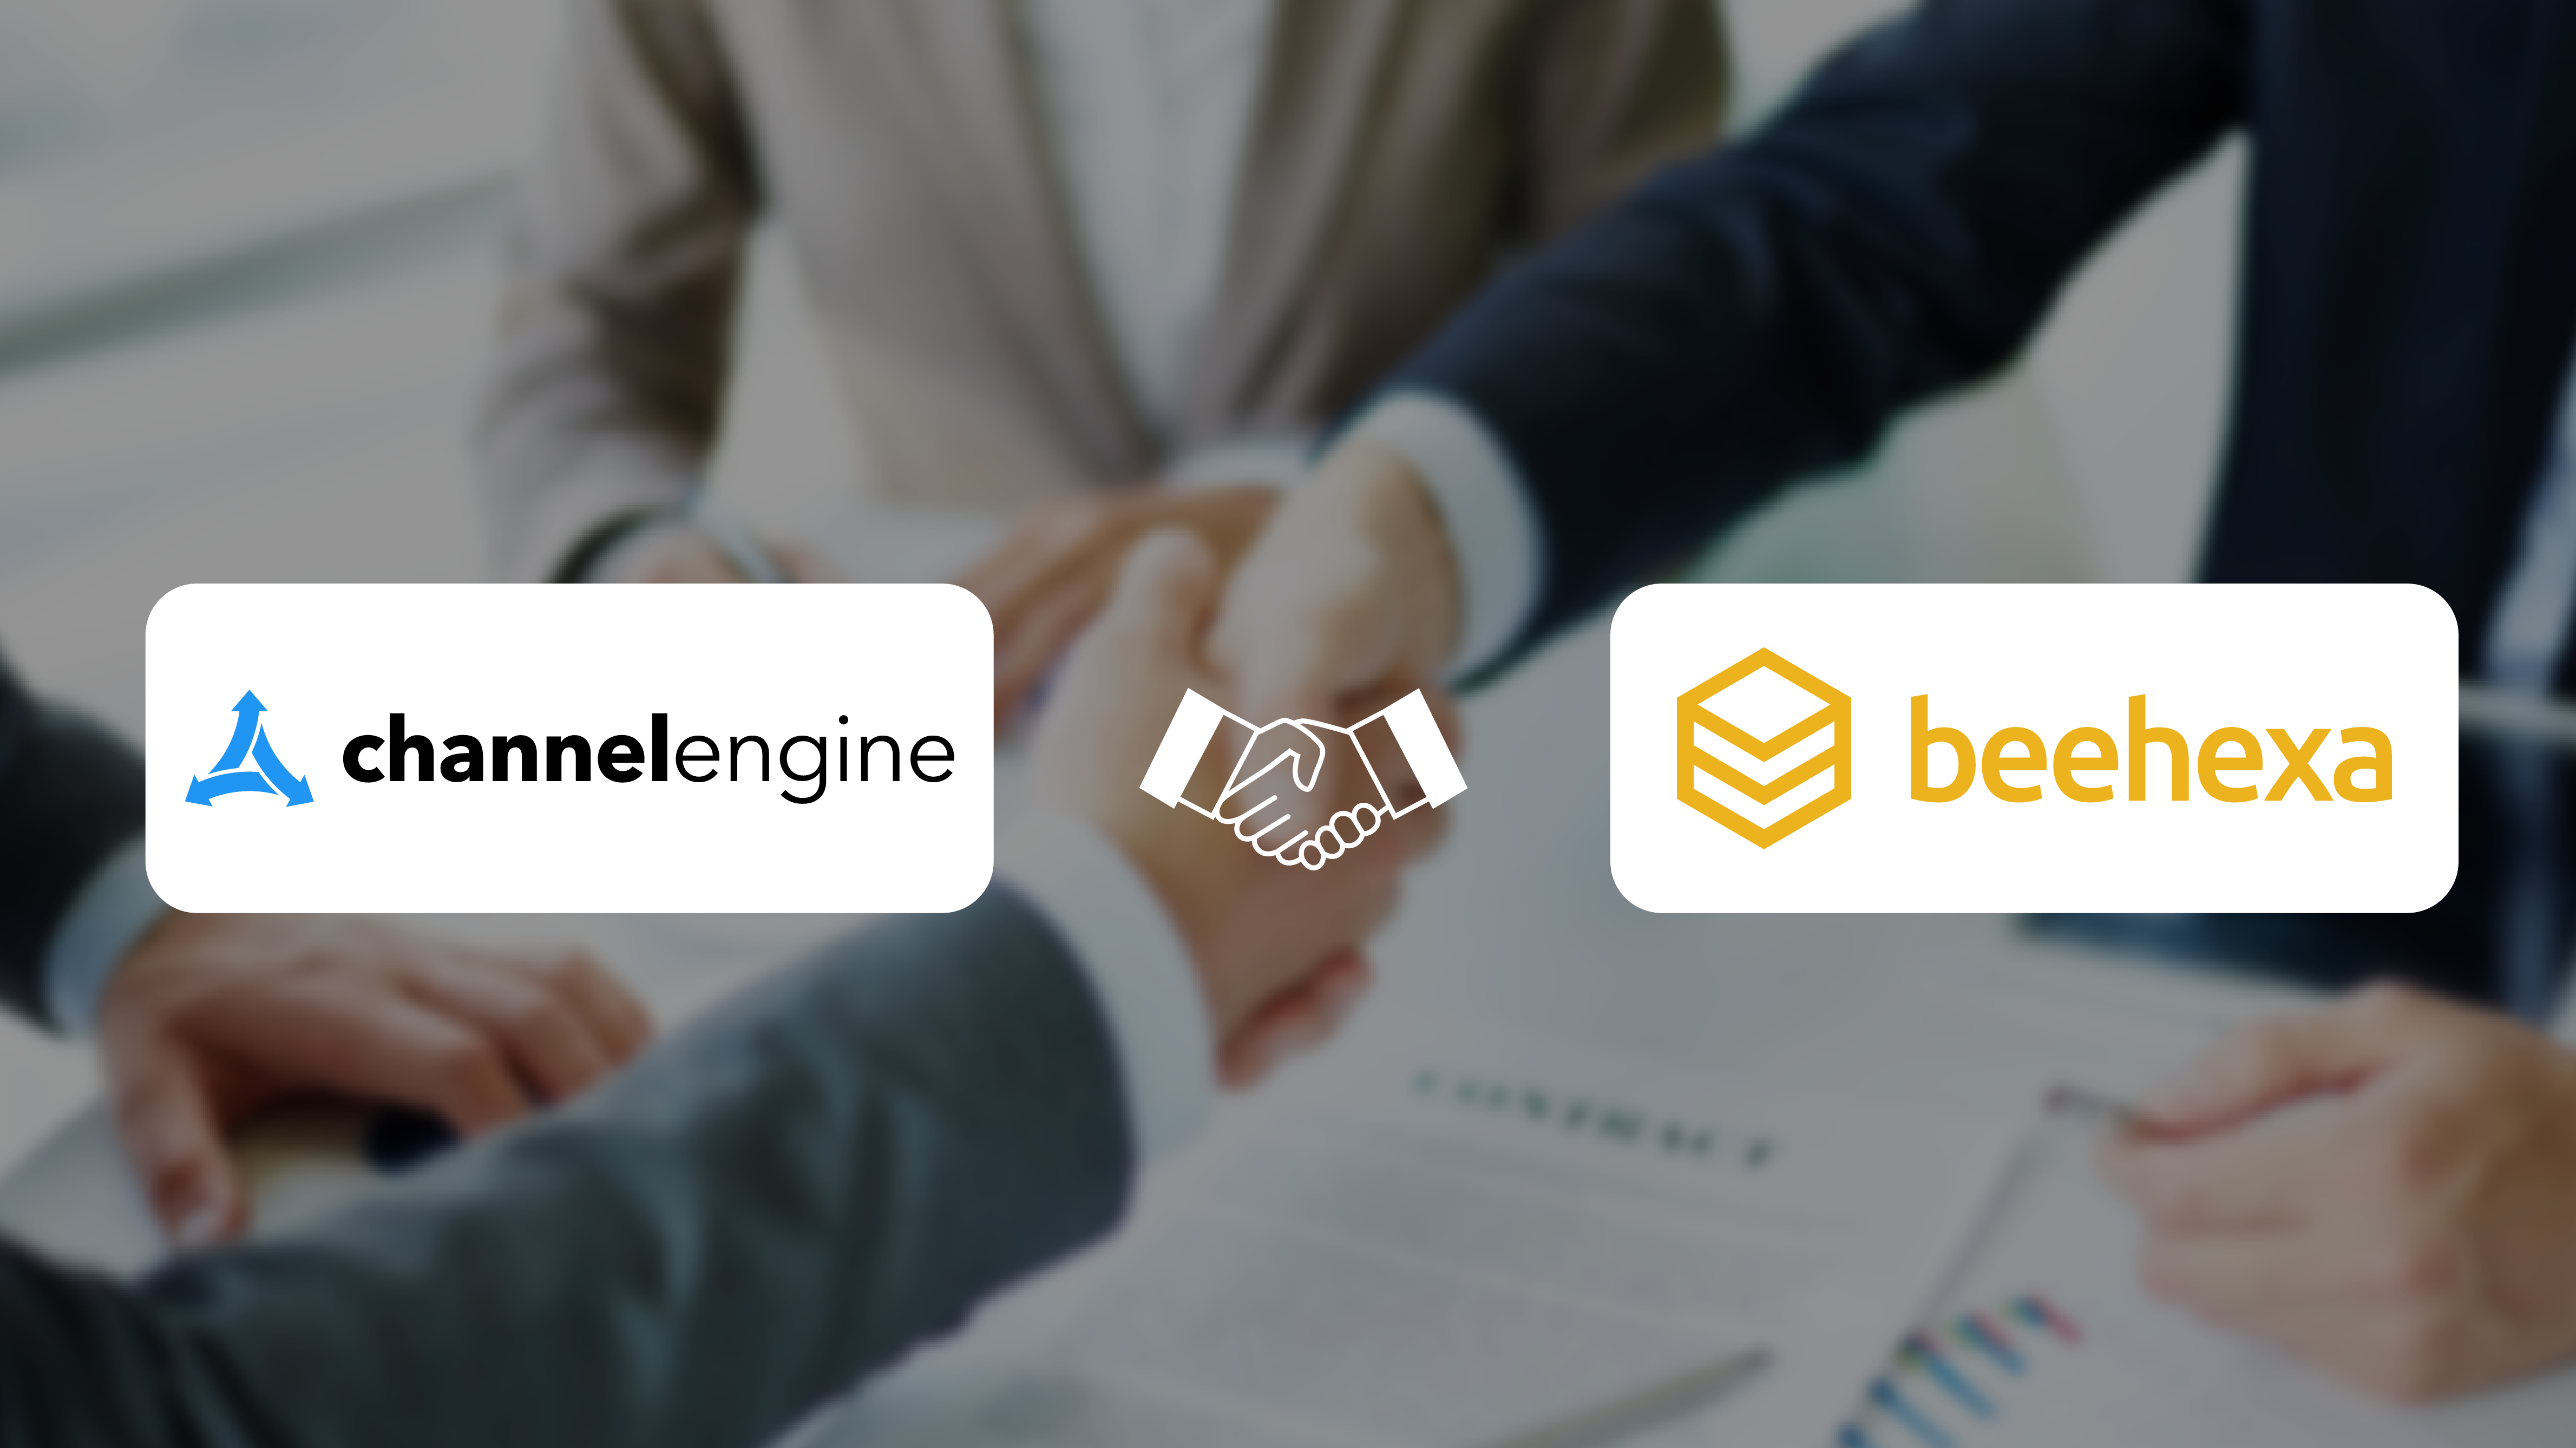 Channelengine and beehexa partnership annoucement